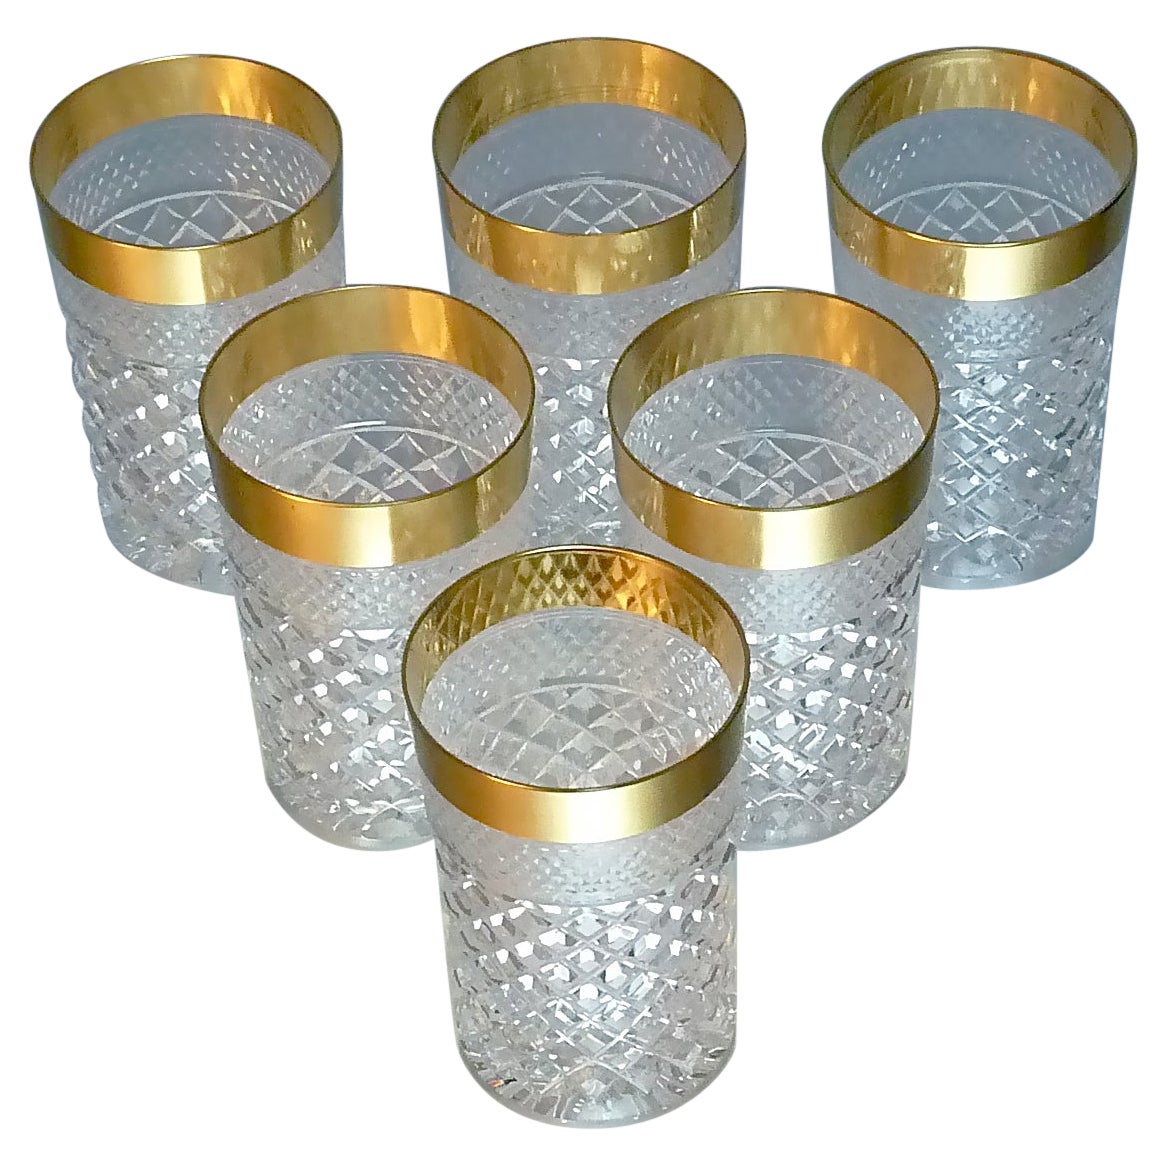 Edelsteine 6 Wassergläser Gold Kristallglas Becher Josephinenhuette Moser